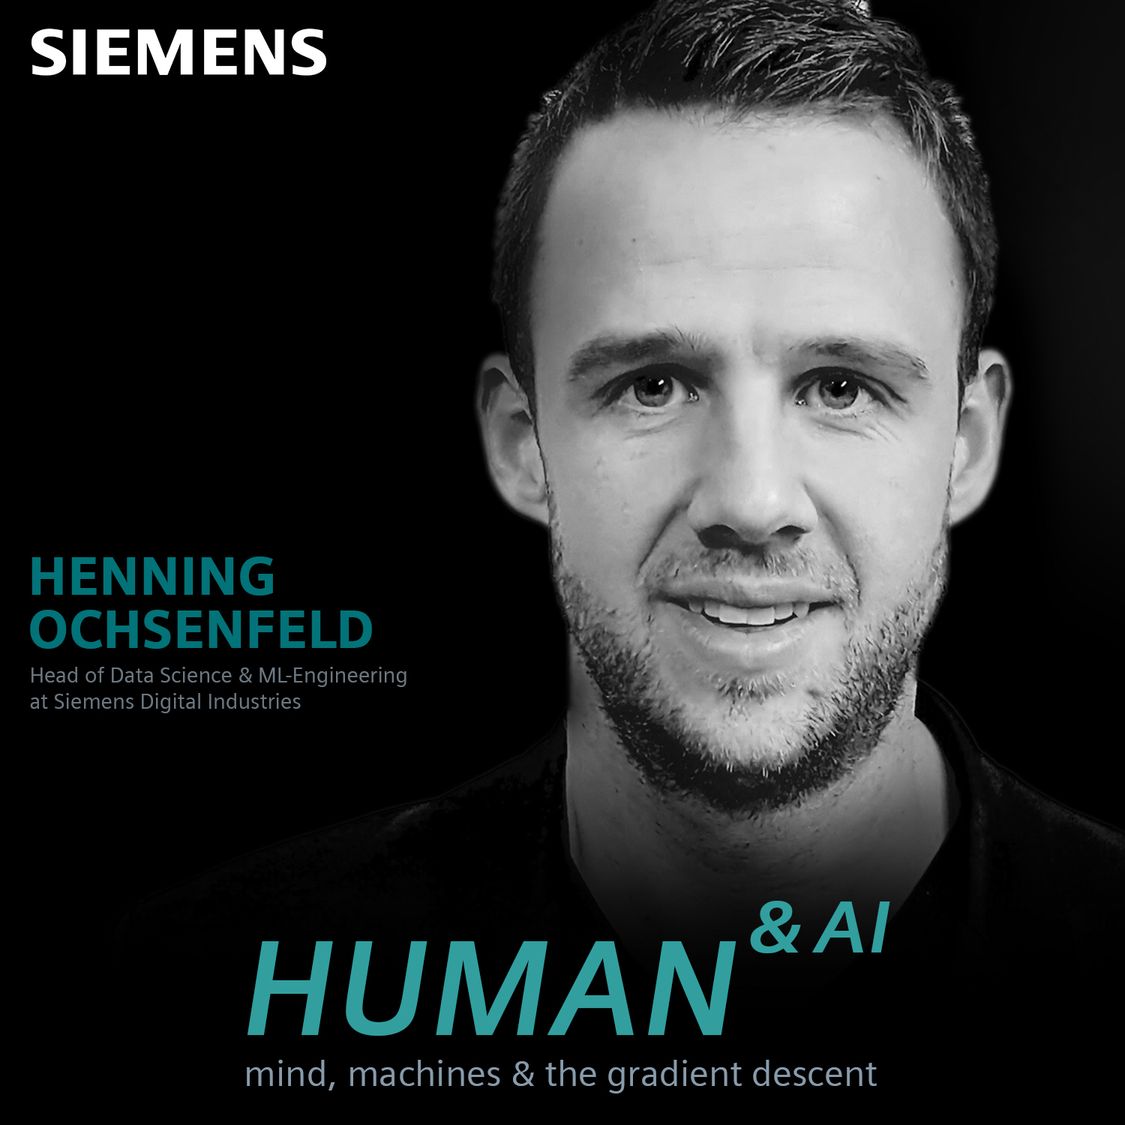 Human & AI